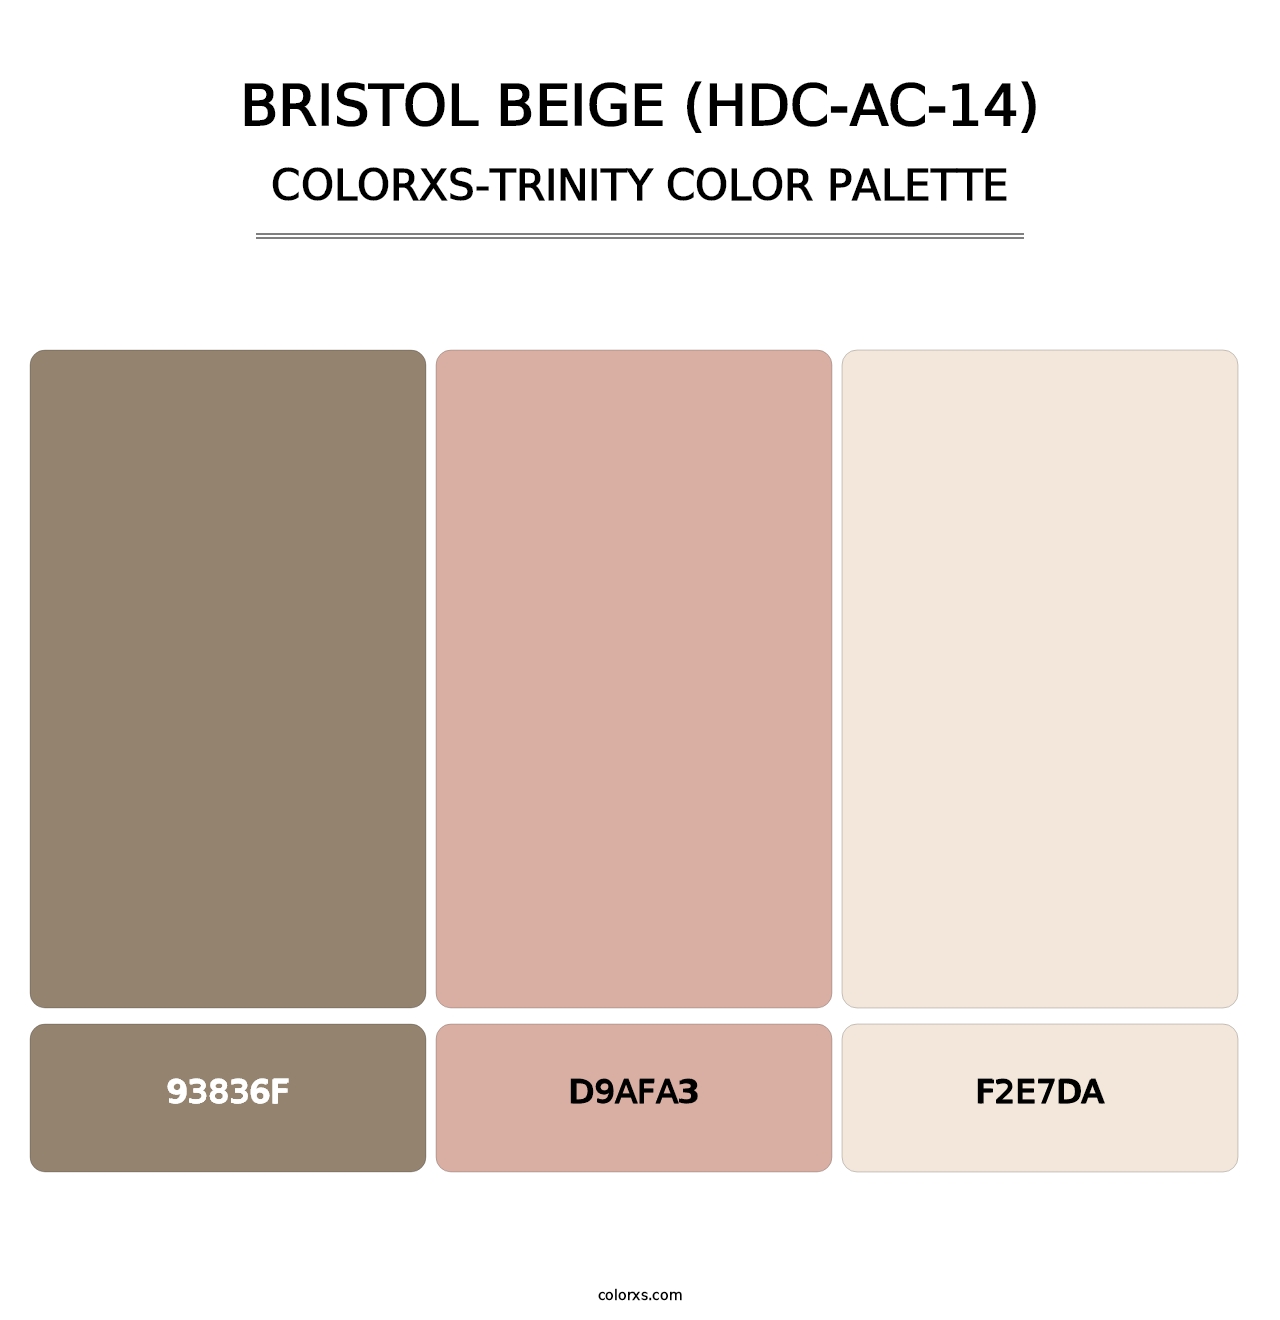 Bristol Beige (HDC-AC-14) - Colorxs Trinity Palette